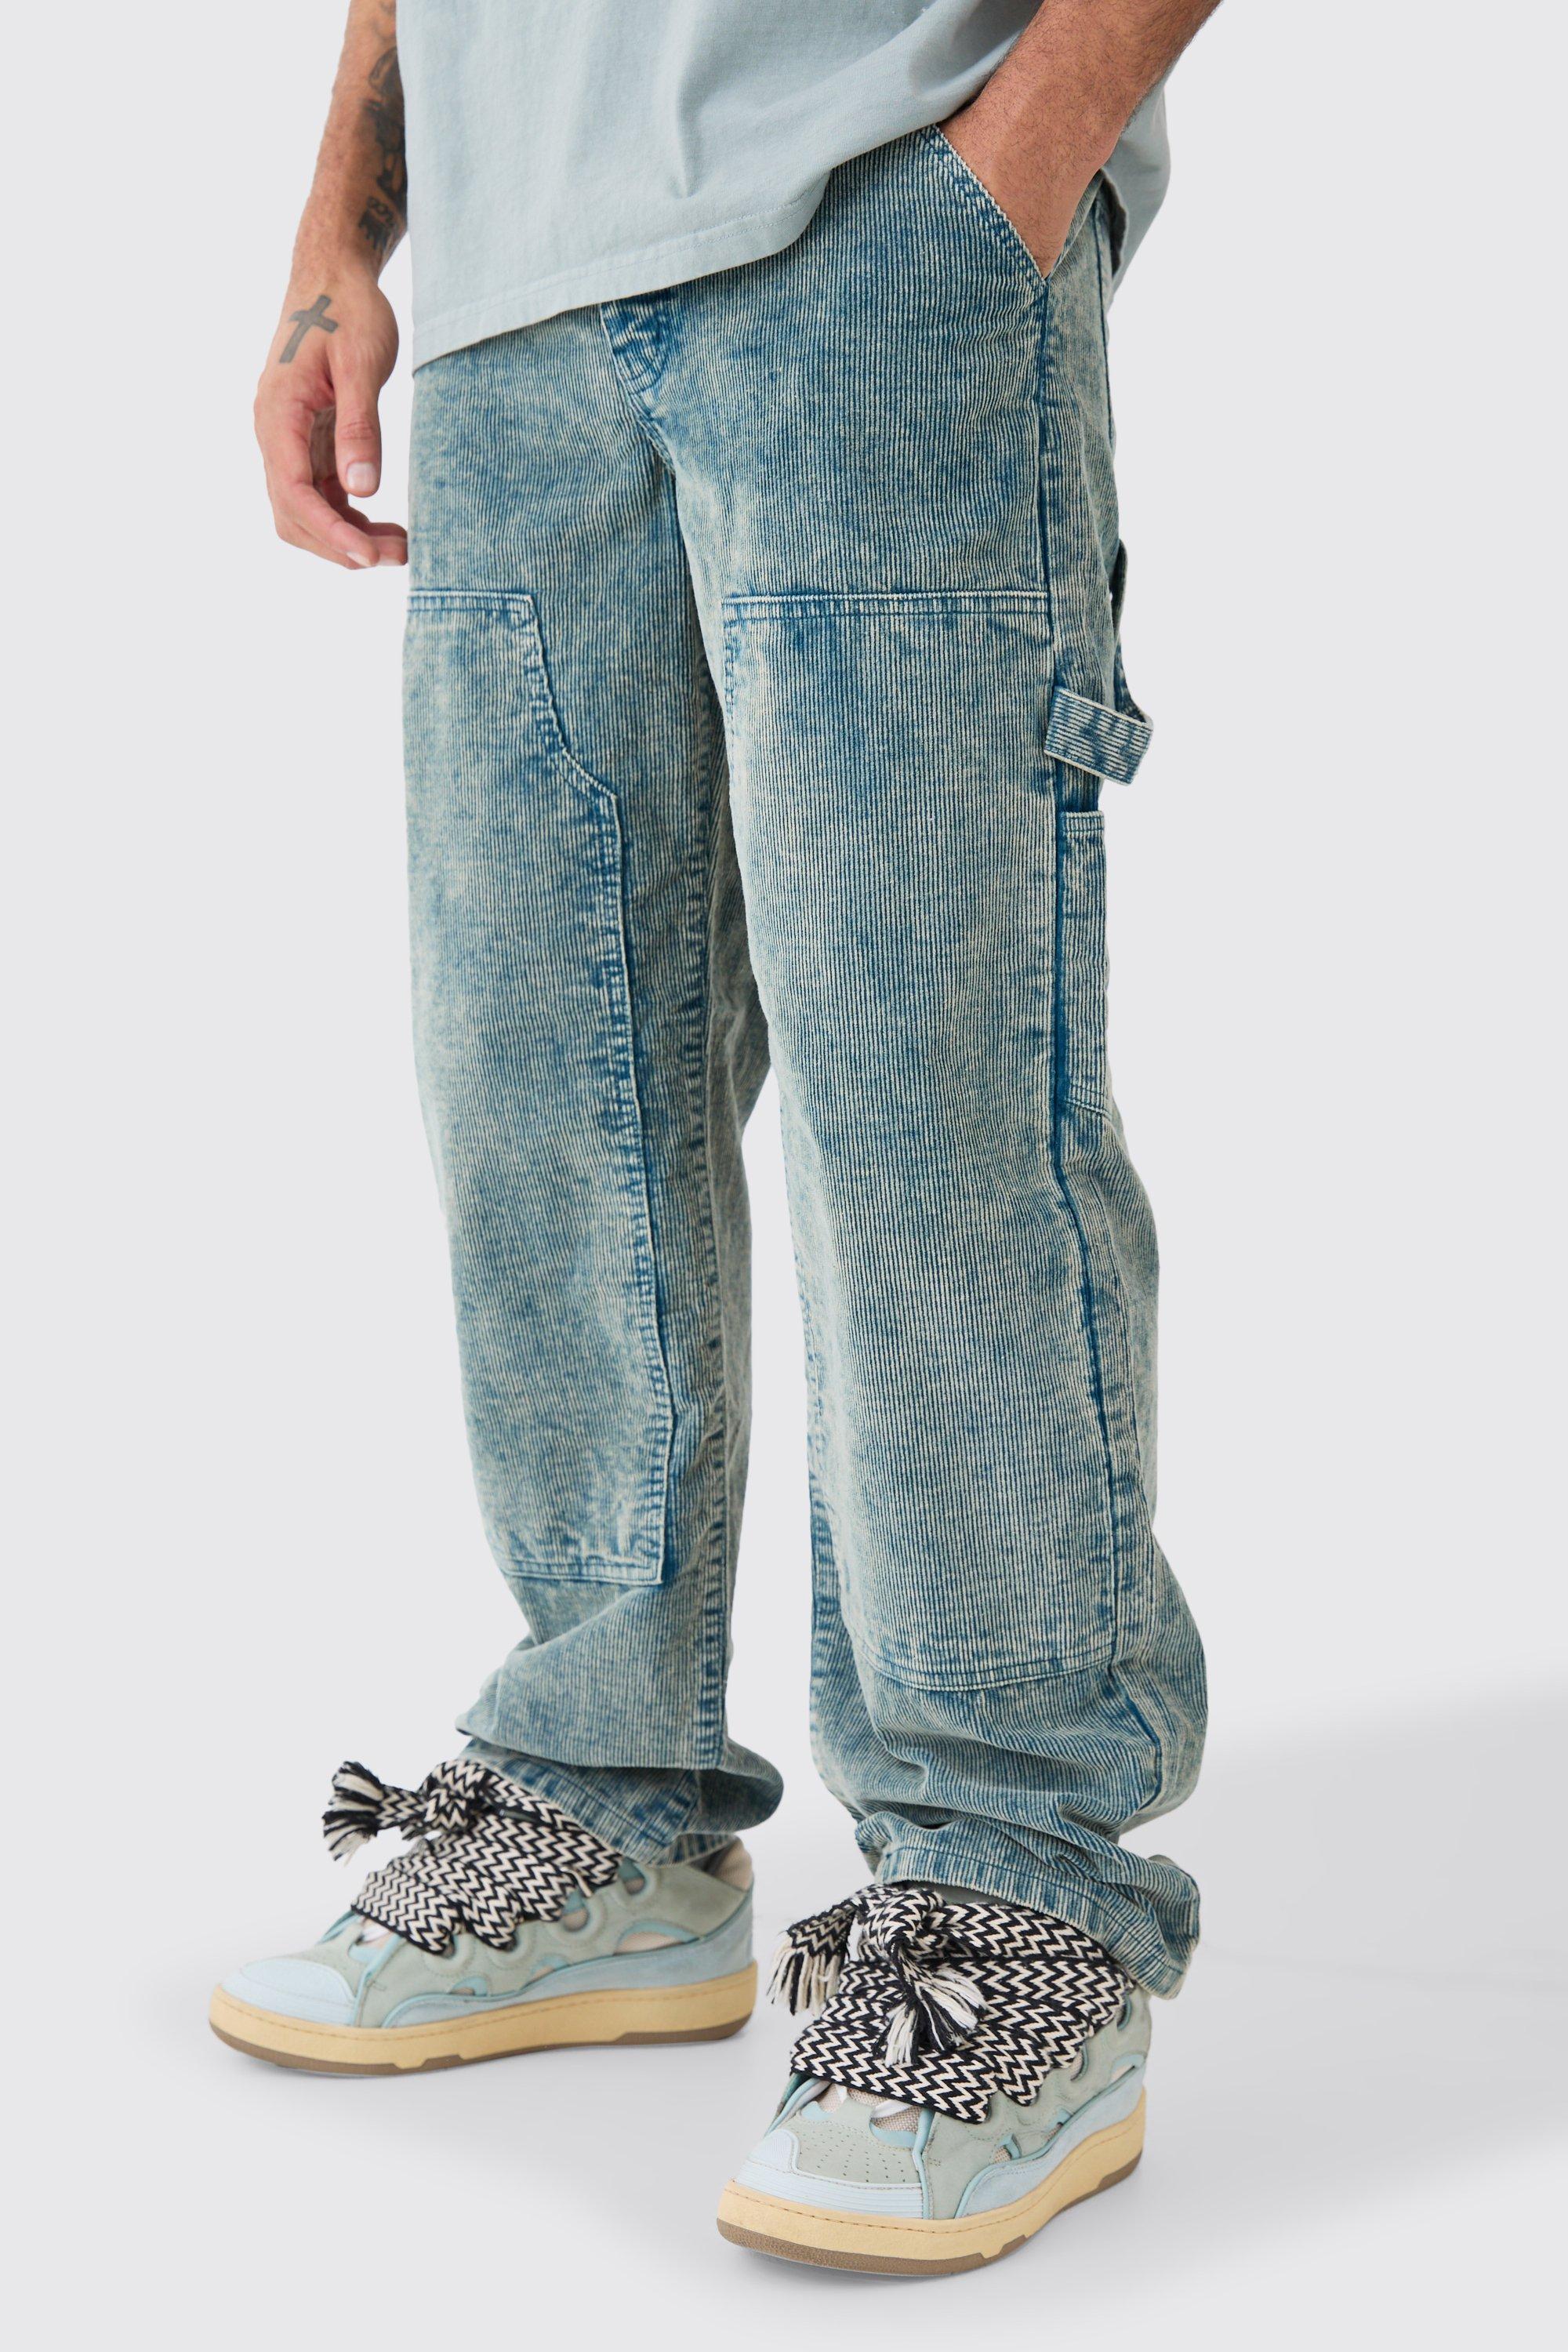 Image of Pantaloni extra comodi in velluto a coste blu navy in lavaggio acido, Navy